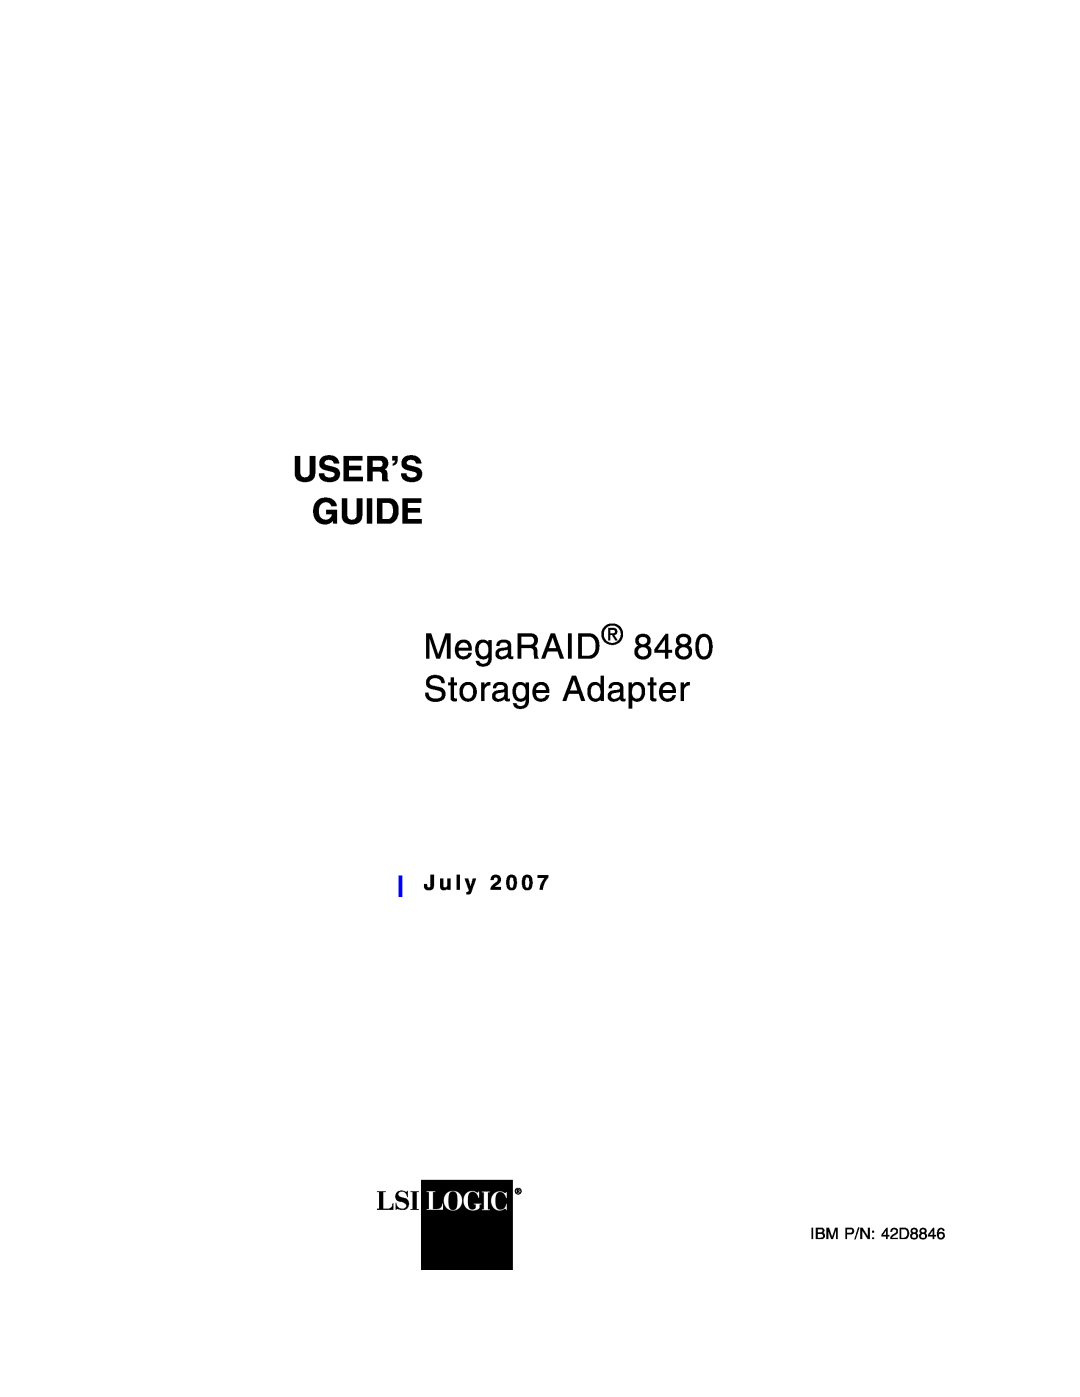 IBM MegaRAID 8480 manual User’S Guide, J u l y 2, MegaRAID Storage Adapter 